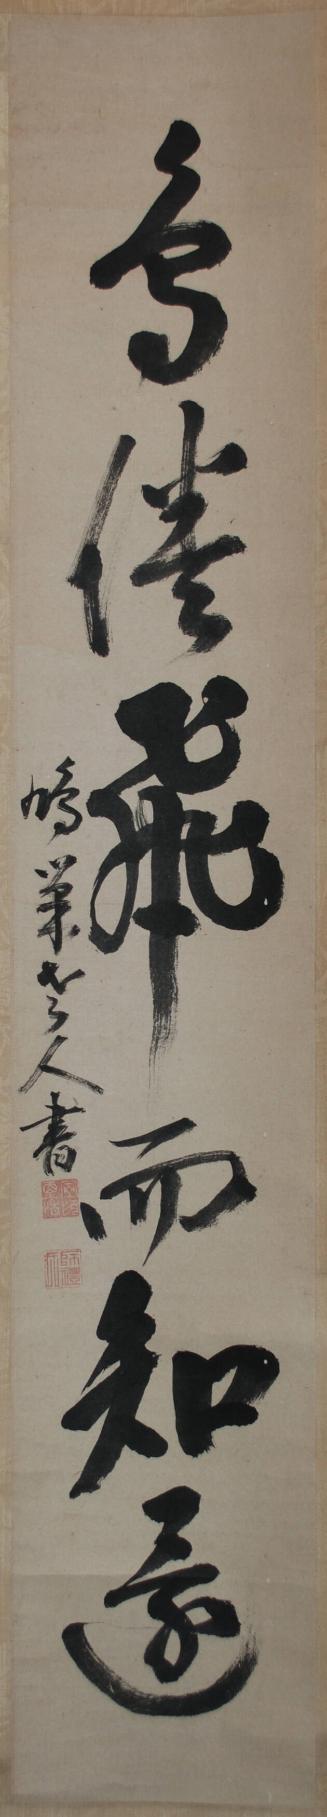 Muro Kyūsō